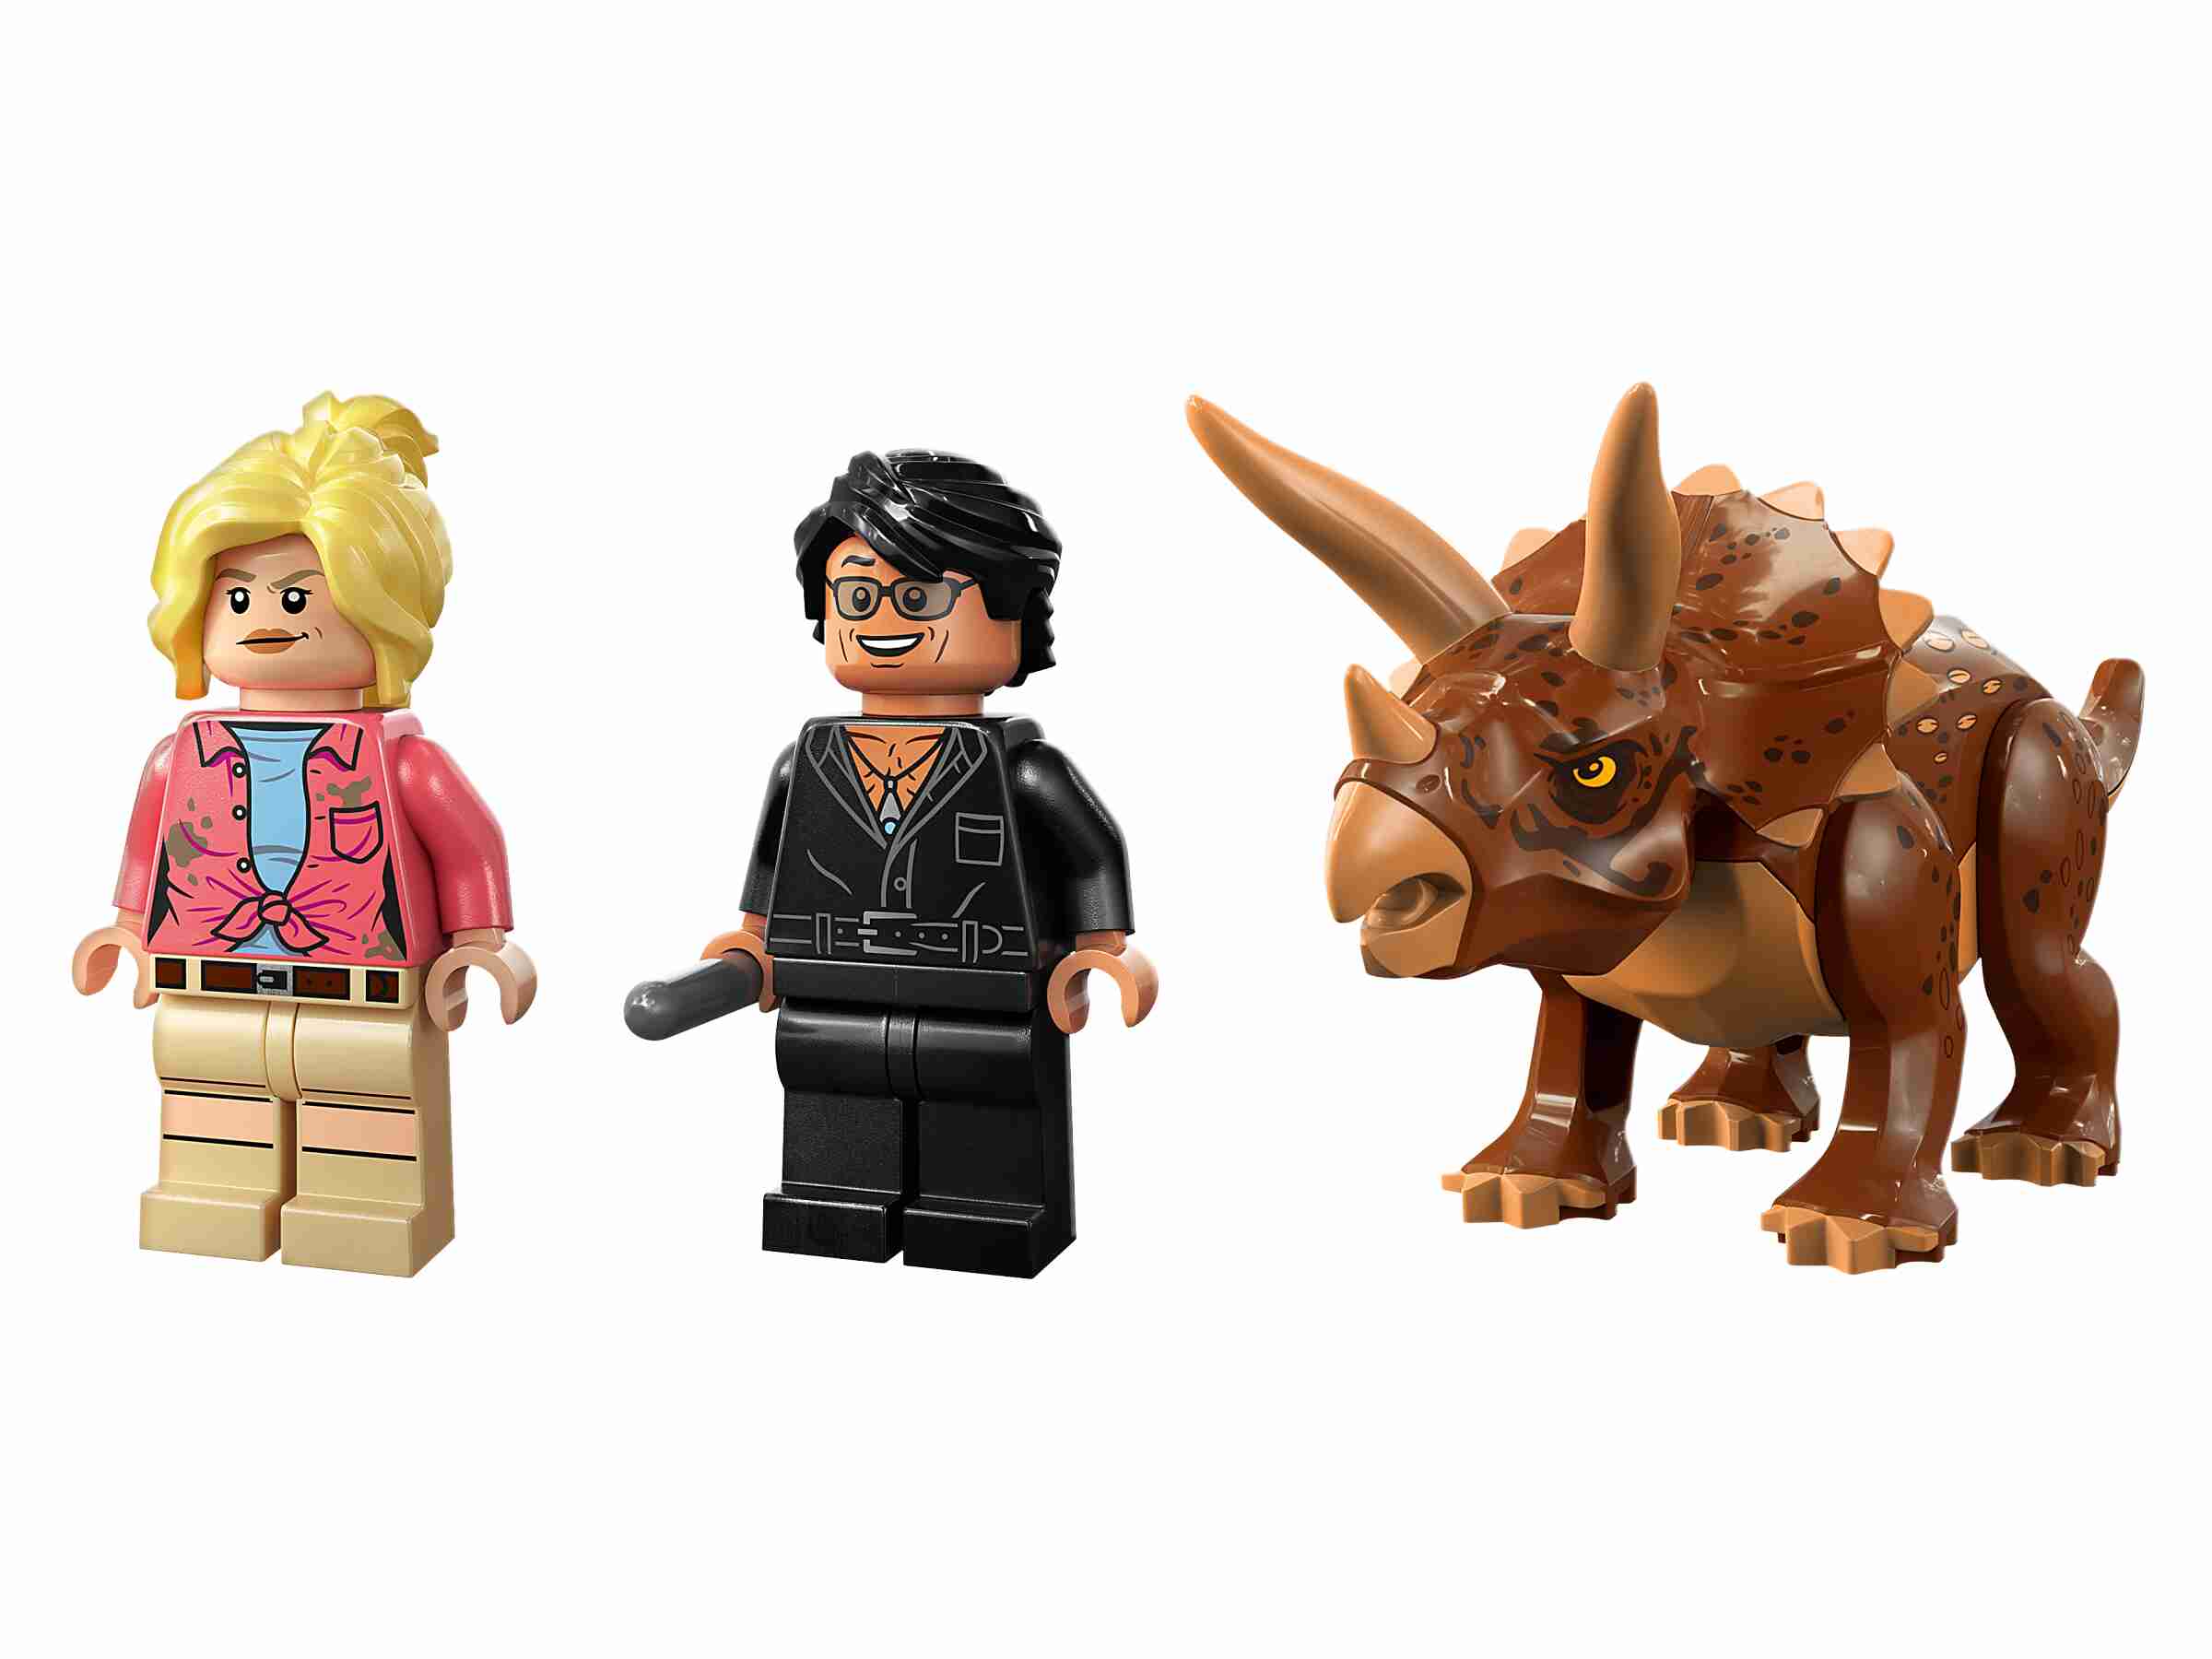 LEGO 76959 Jurassic Park Triceratops-Forschung, Ford Explorer, 2 Minifiguren